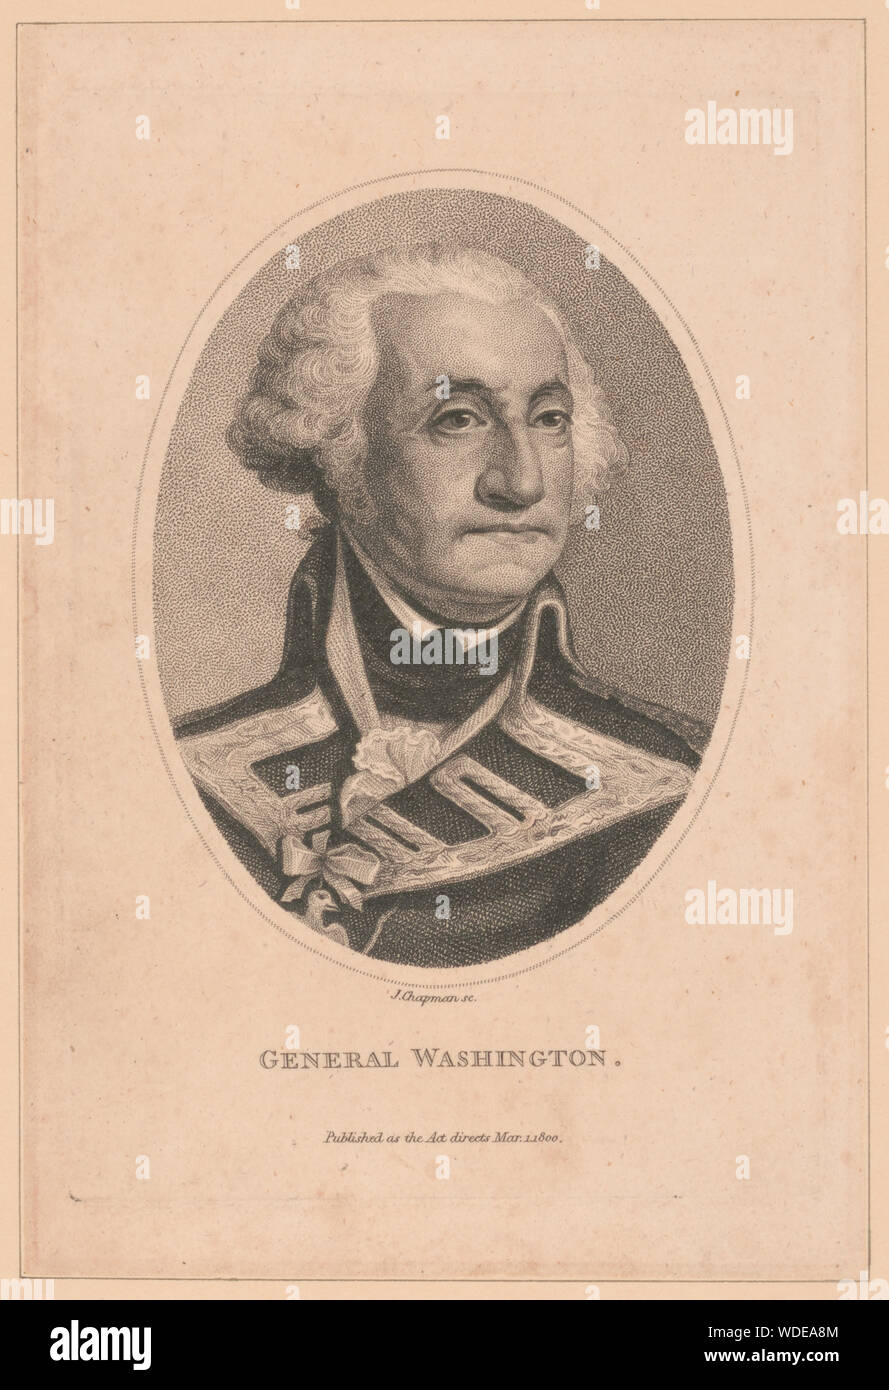 General Washington / J. Chapman sc. Abstract/medium: 1 print : stipple engraving  11.5 x 8.5 cm (image), 18.6 x 12.5 cm (sheet), 26.9 x 19 cm (mount) Stock Photo